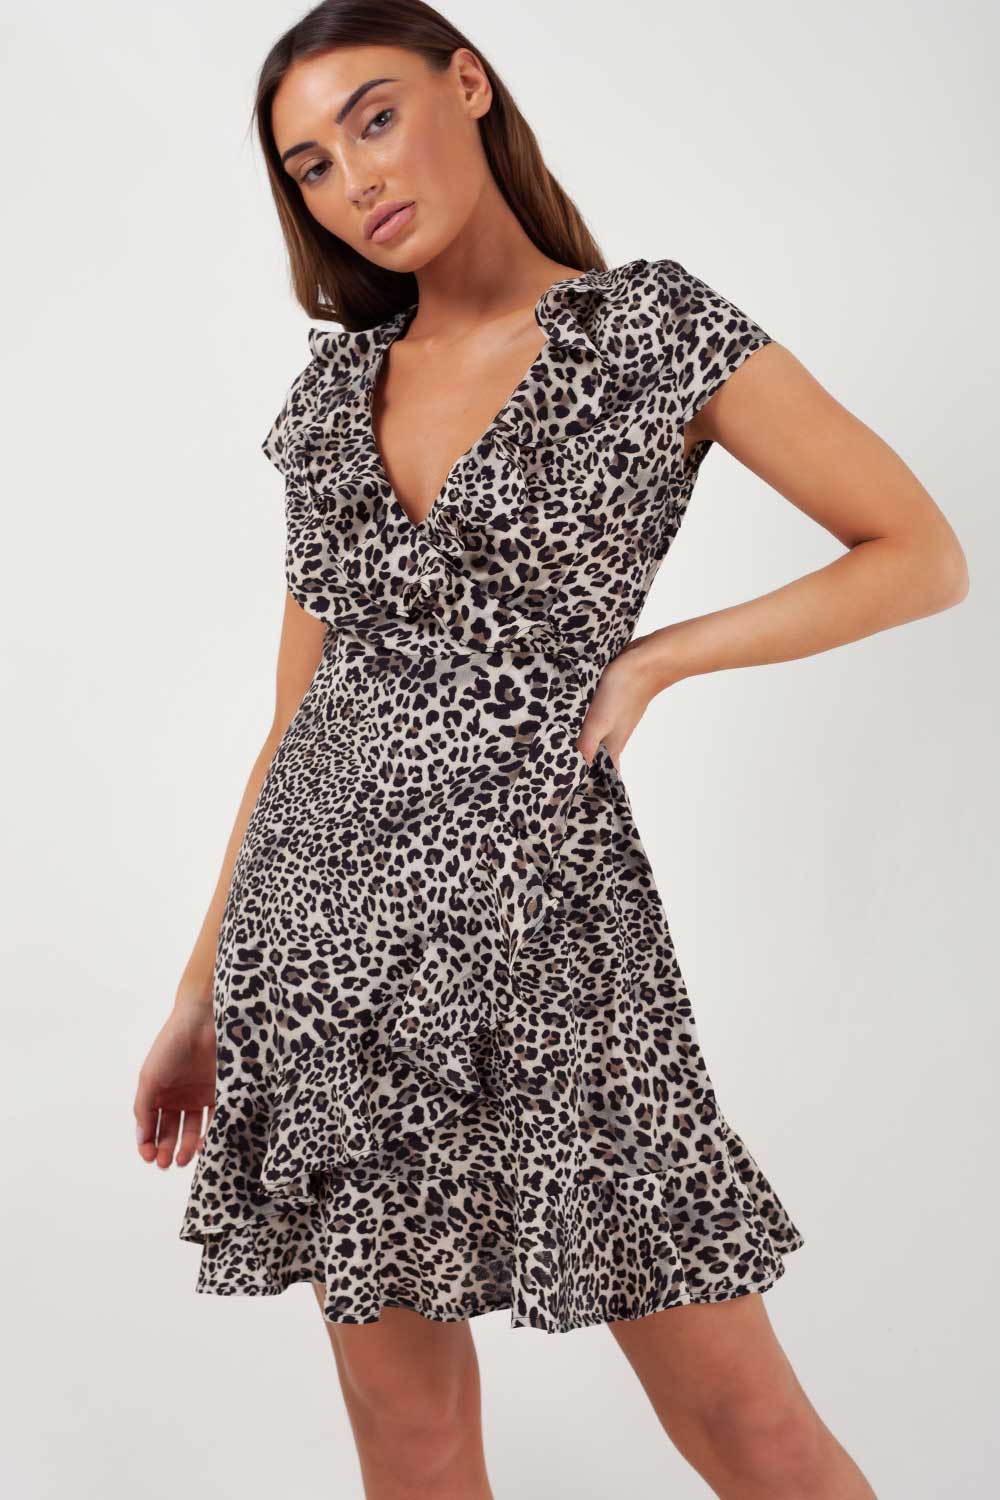 Leopard Print Wrap Dress UK Size 8-18 ...